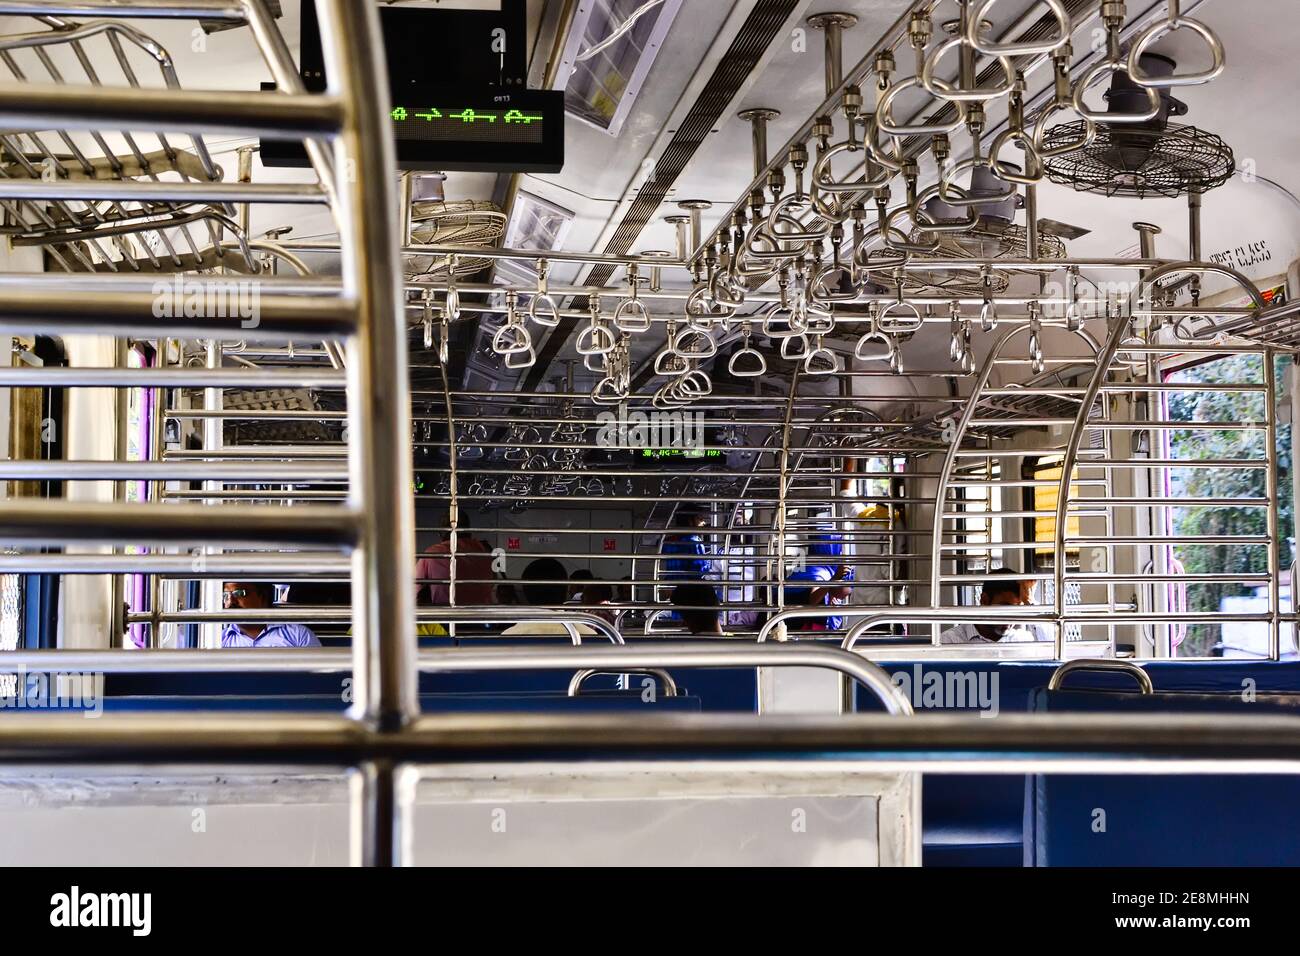 Mumbai, Maharashtra, India - December, 2016: Interior of local city train. Rows of steel handrails inside empty coach with fans of local train. Stock Photo